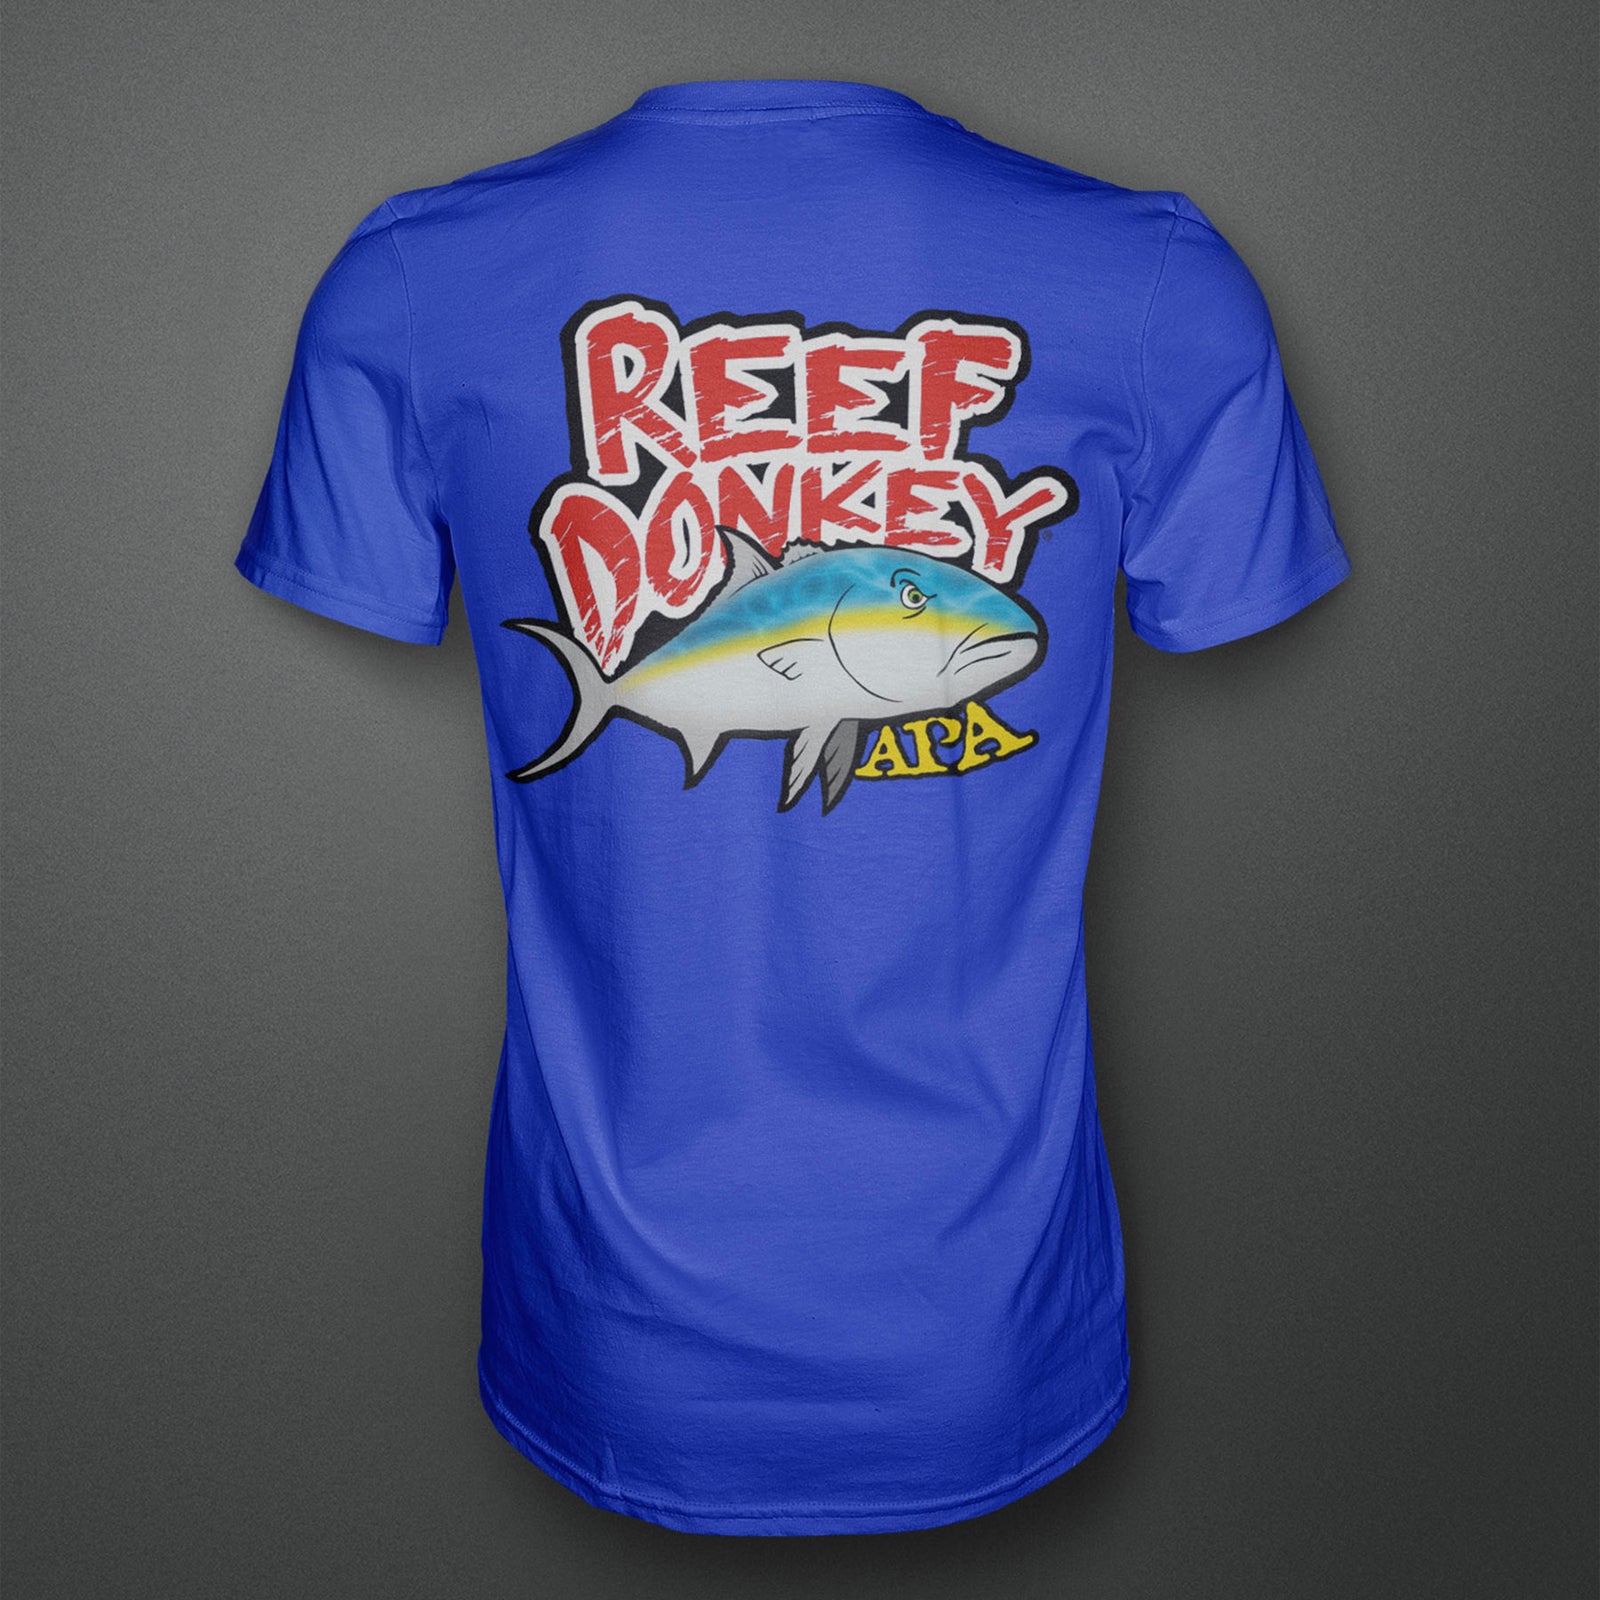 Reef Donkey T-Shirt